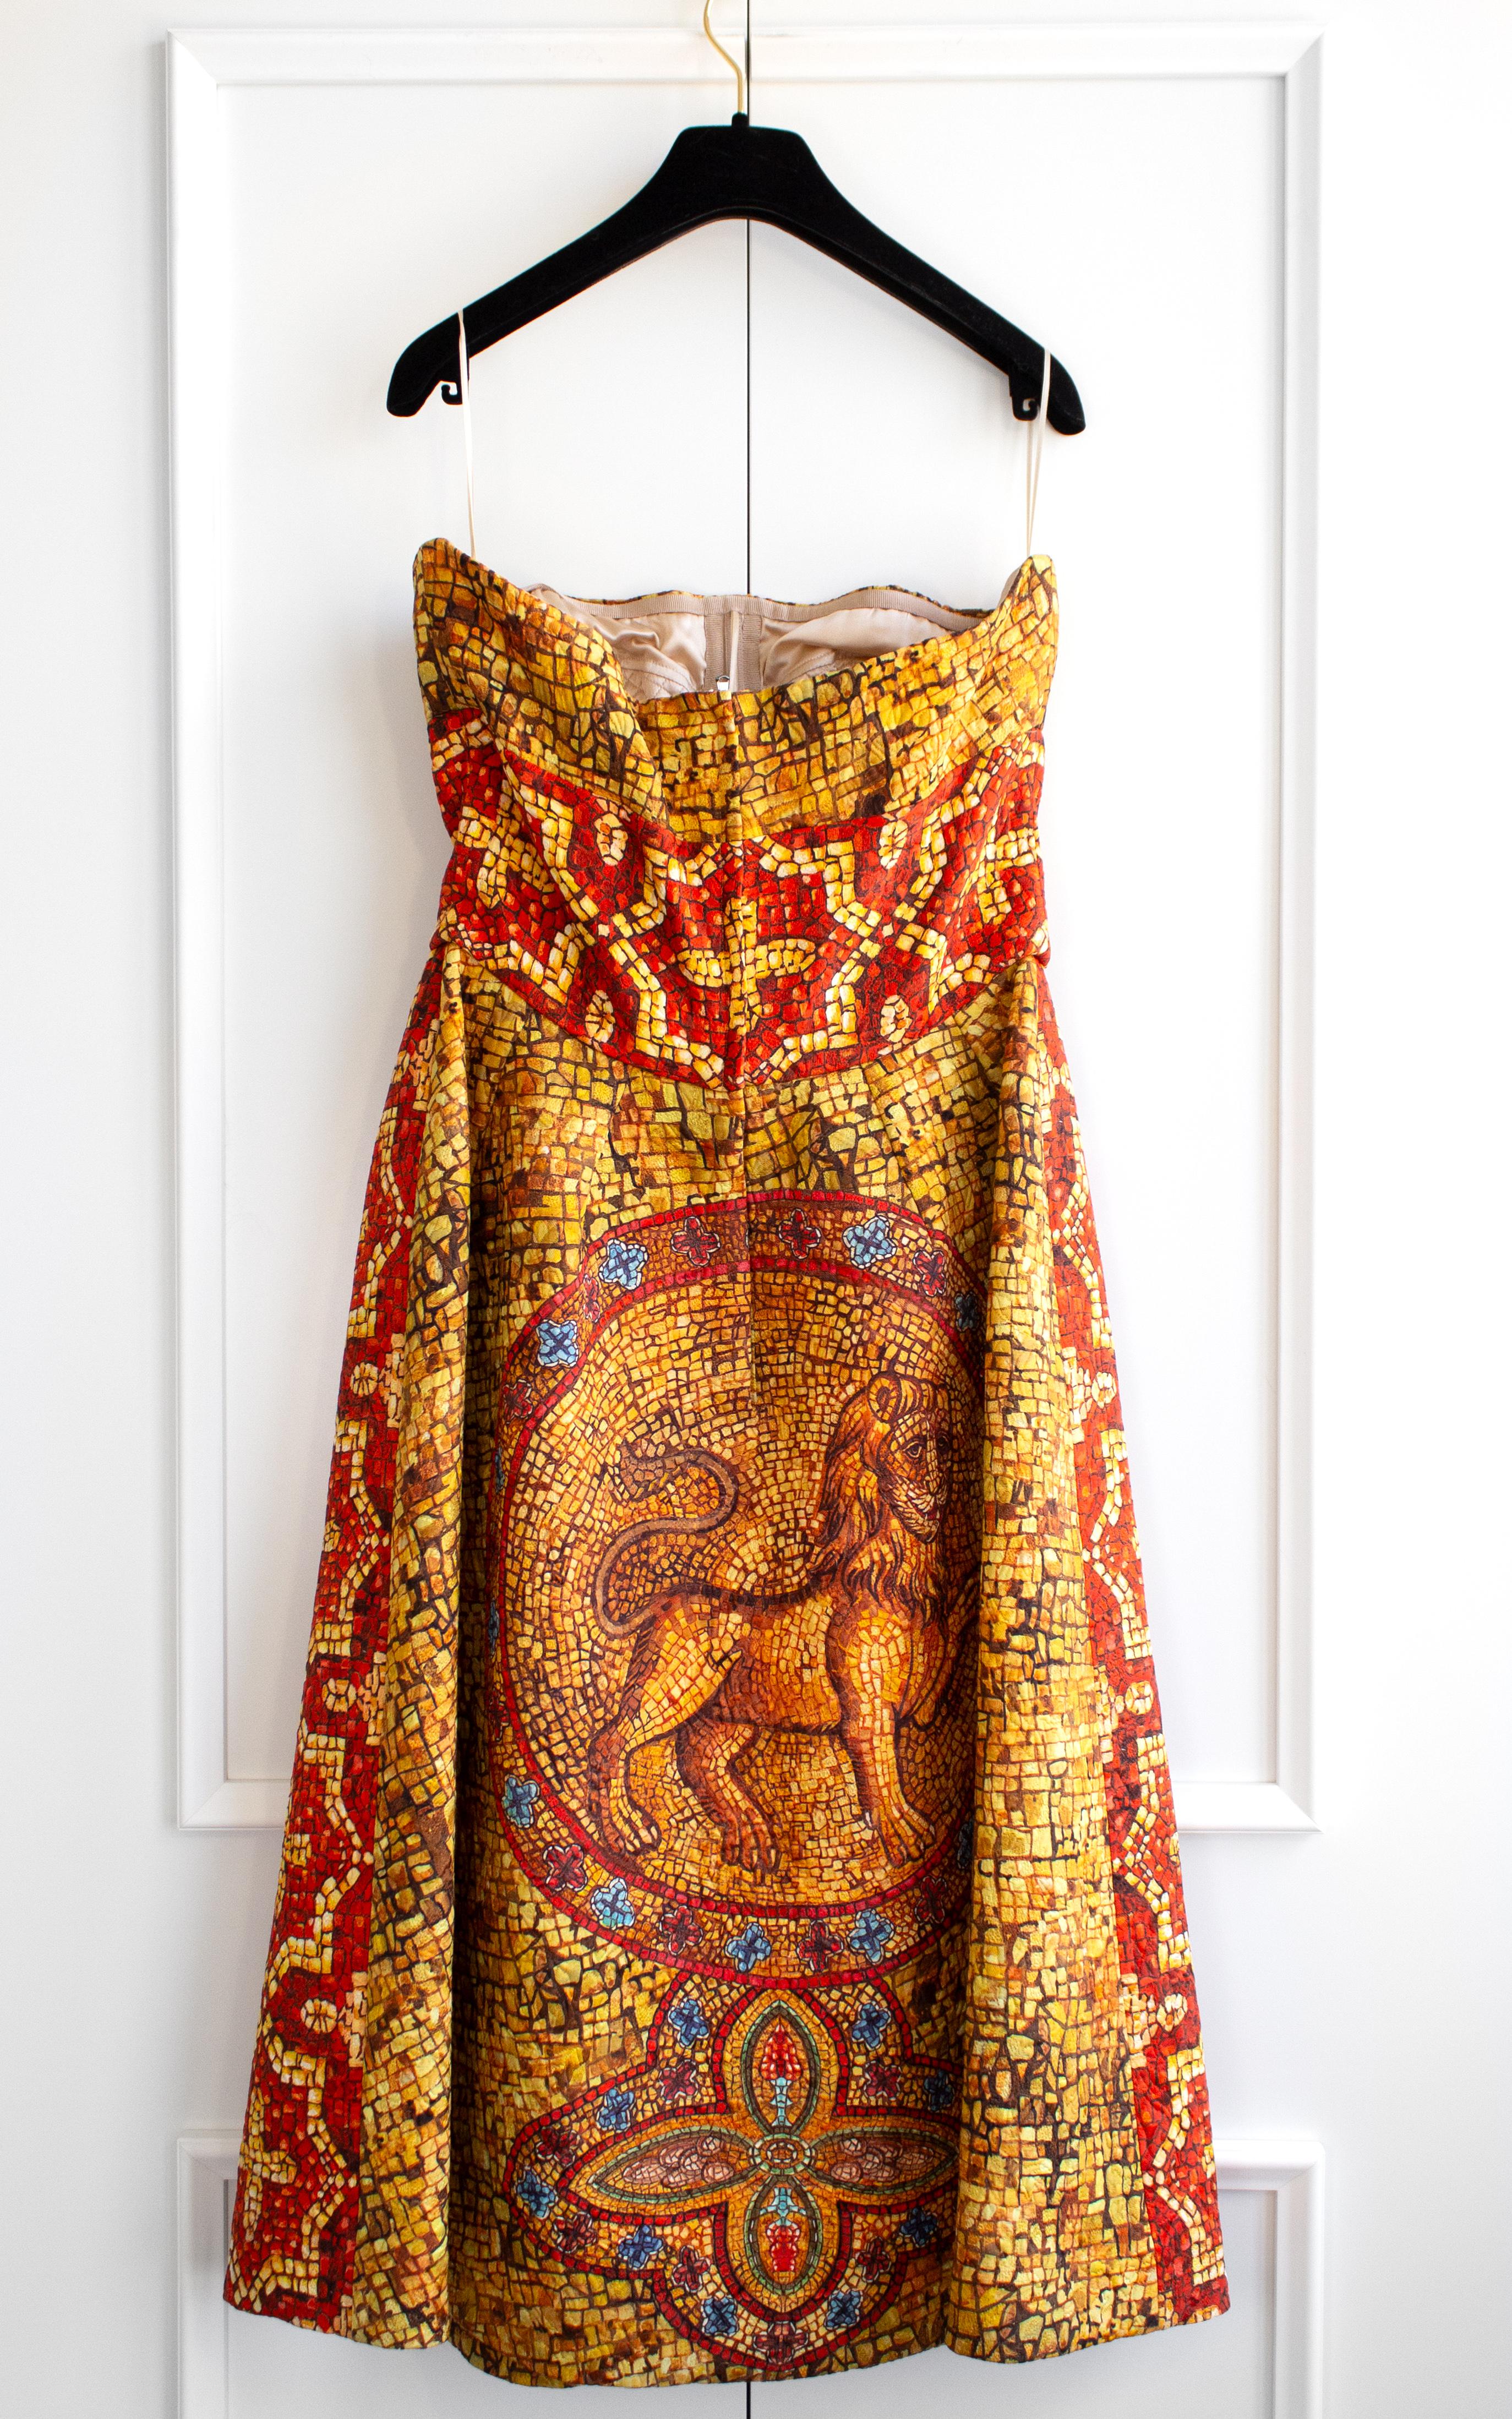 Dolce&Gabbana Fall/Winter 2013 Byzantine Mosaic Gold Red Cross Lion Dress 1